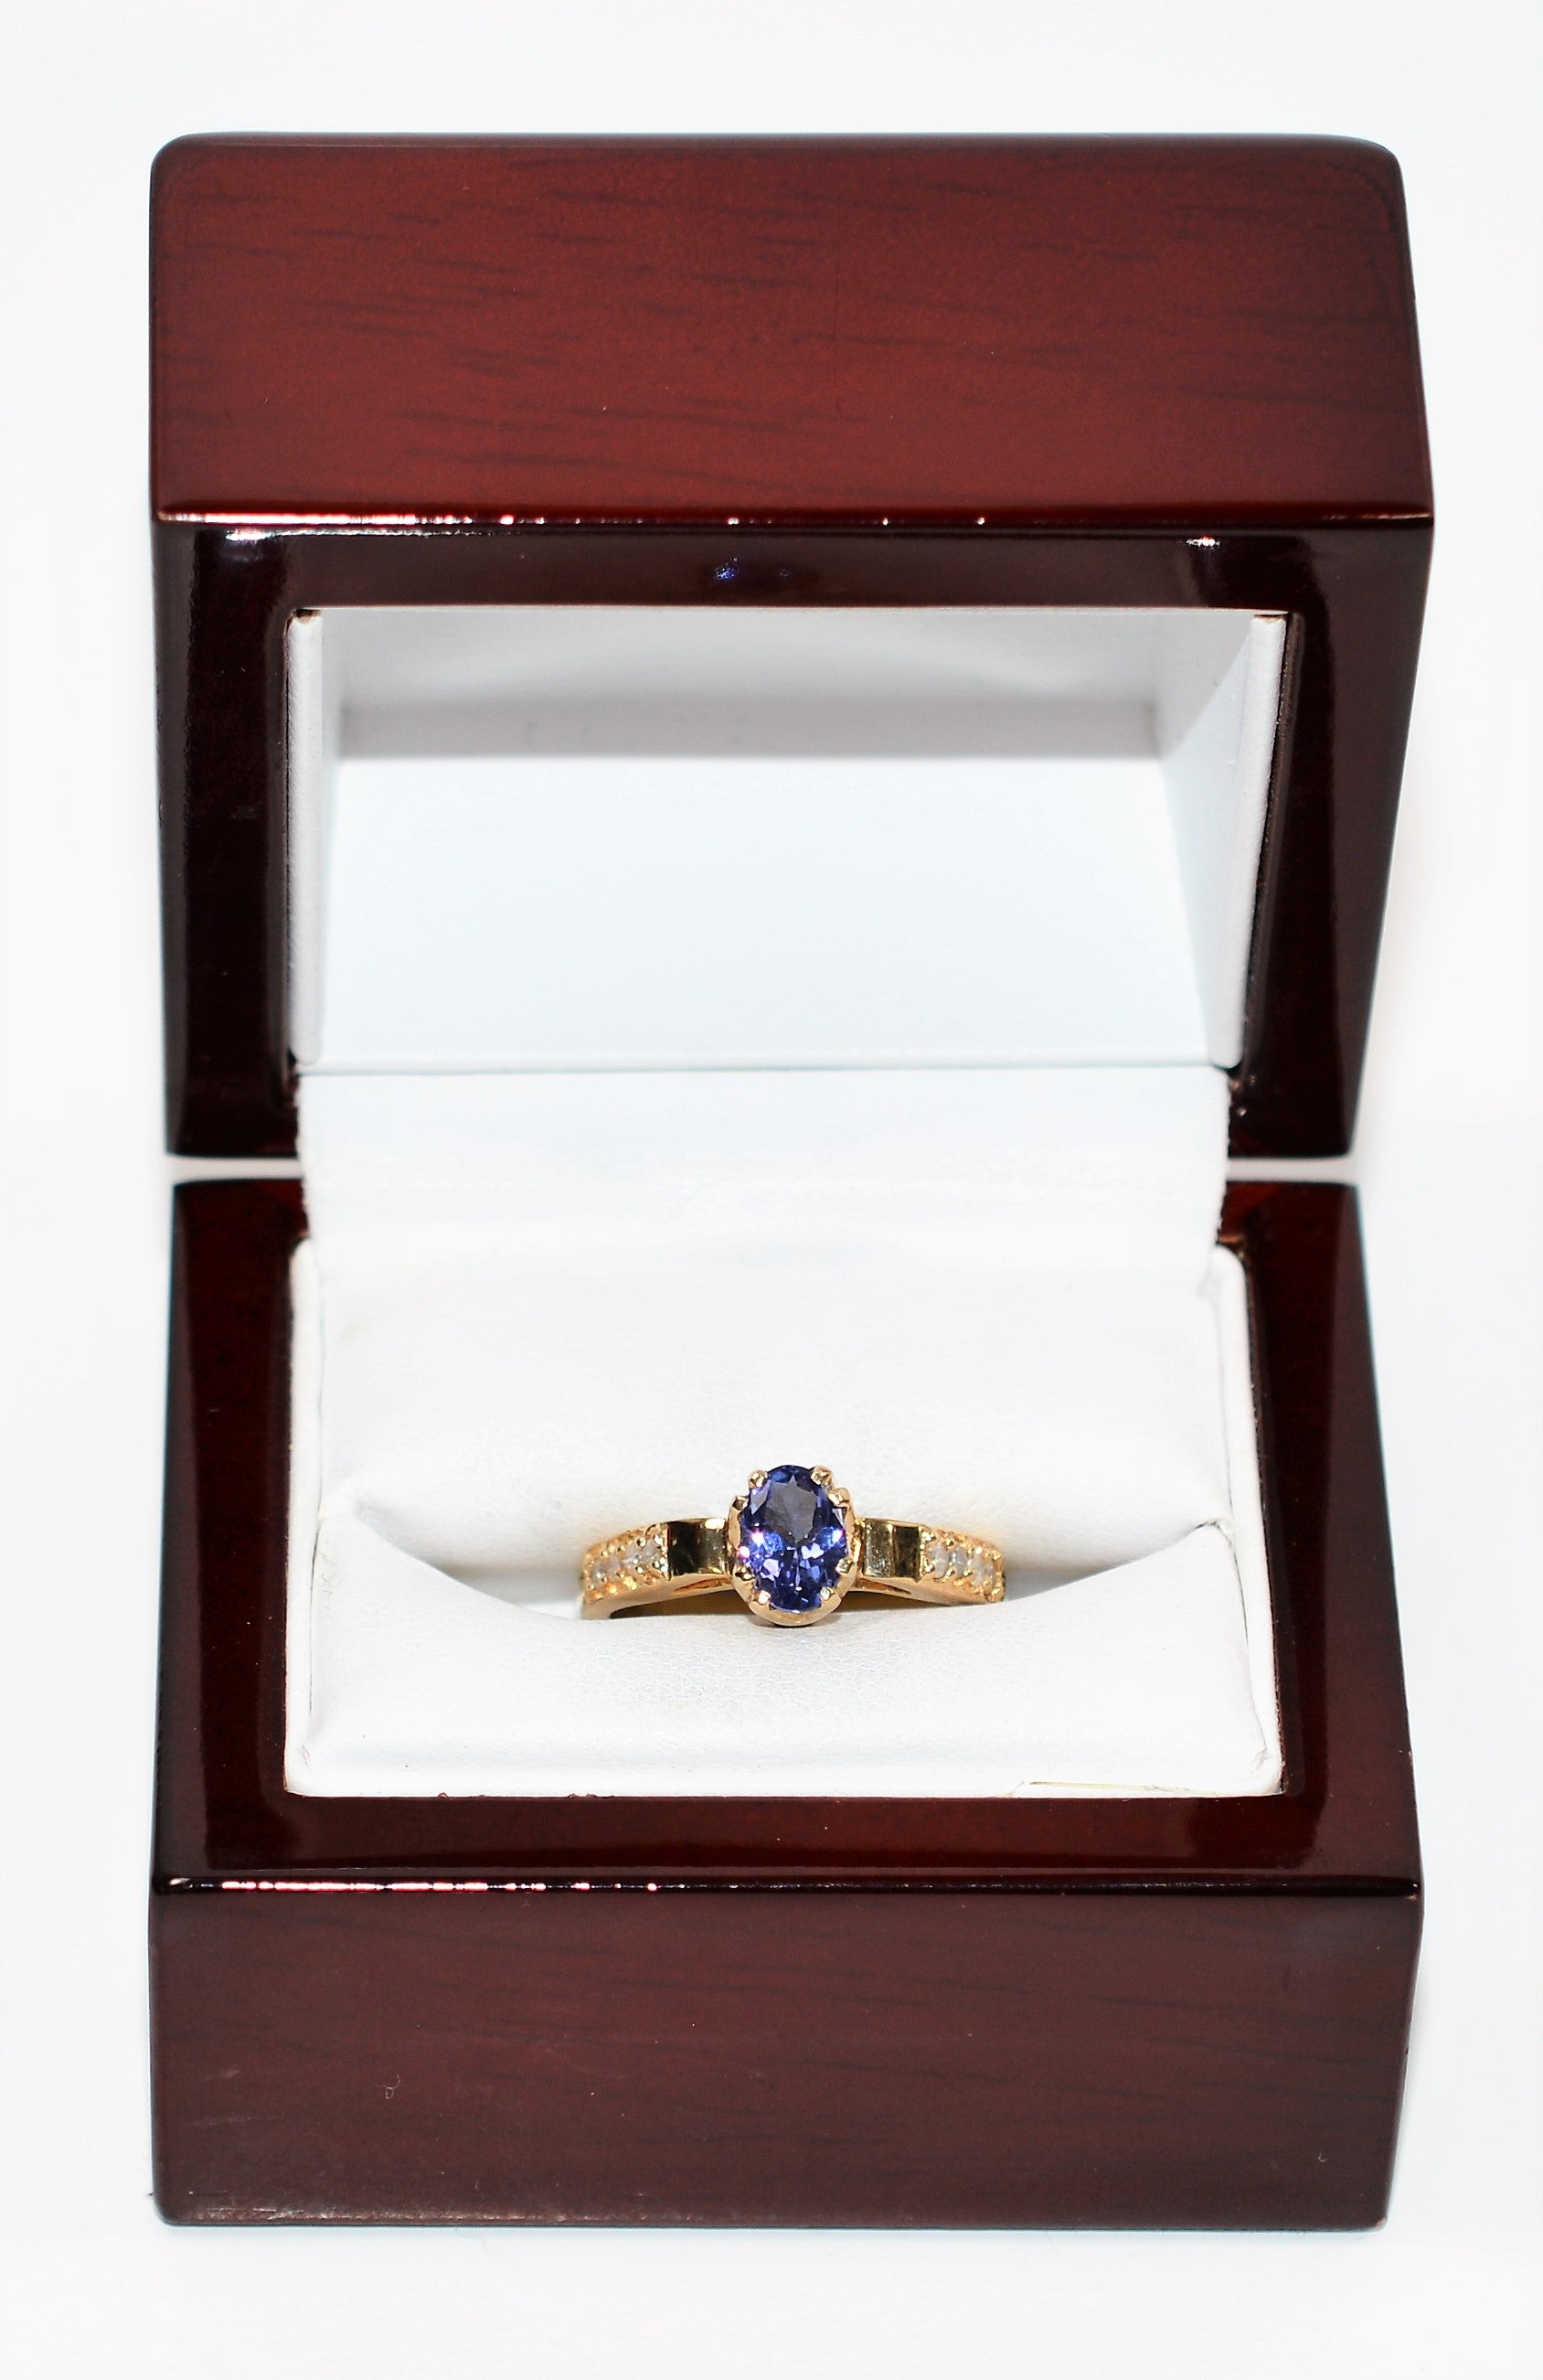 Natural Tanzanite & Diamond Ring 14K Solid Gold .97tcw Engagement Ring Gemstone Ring Bridal Jewelry Wedding Ring Tanzanite Ring Women's Ring